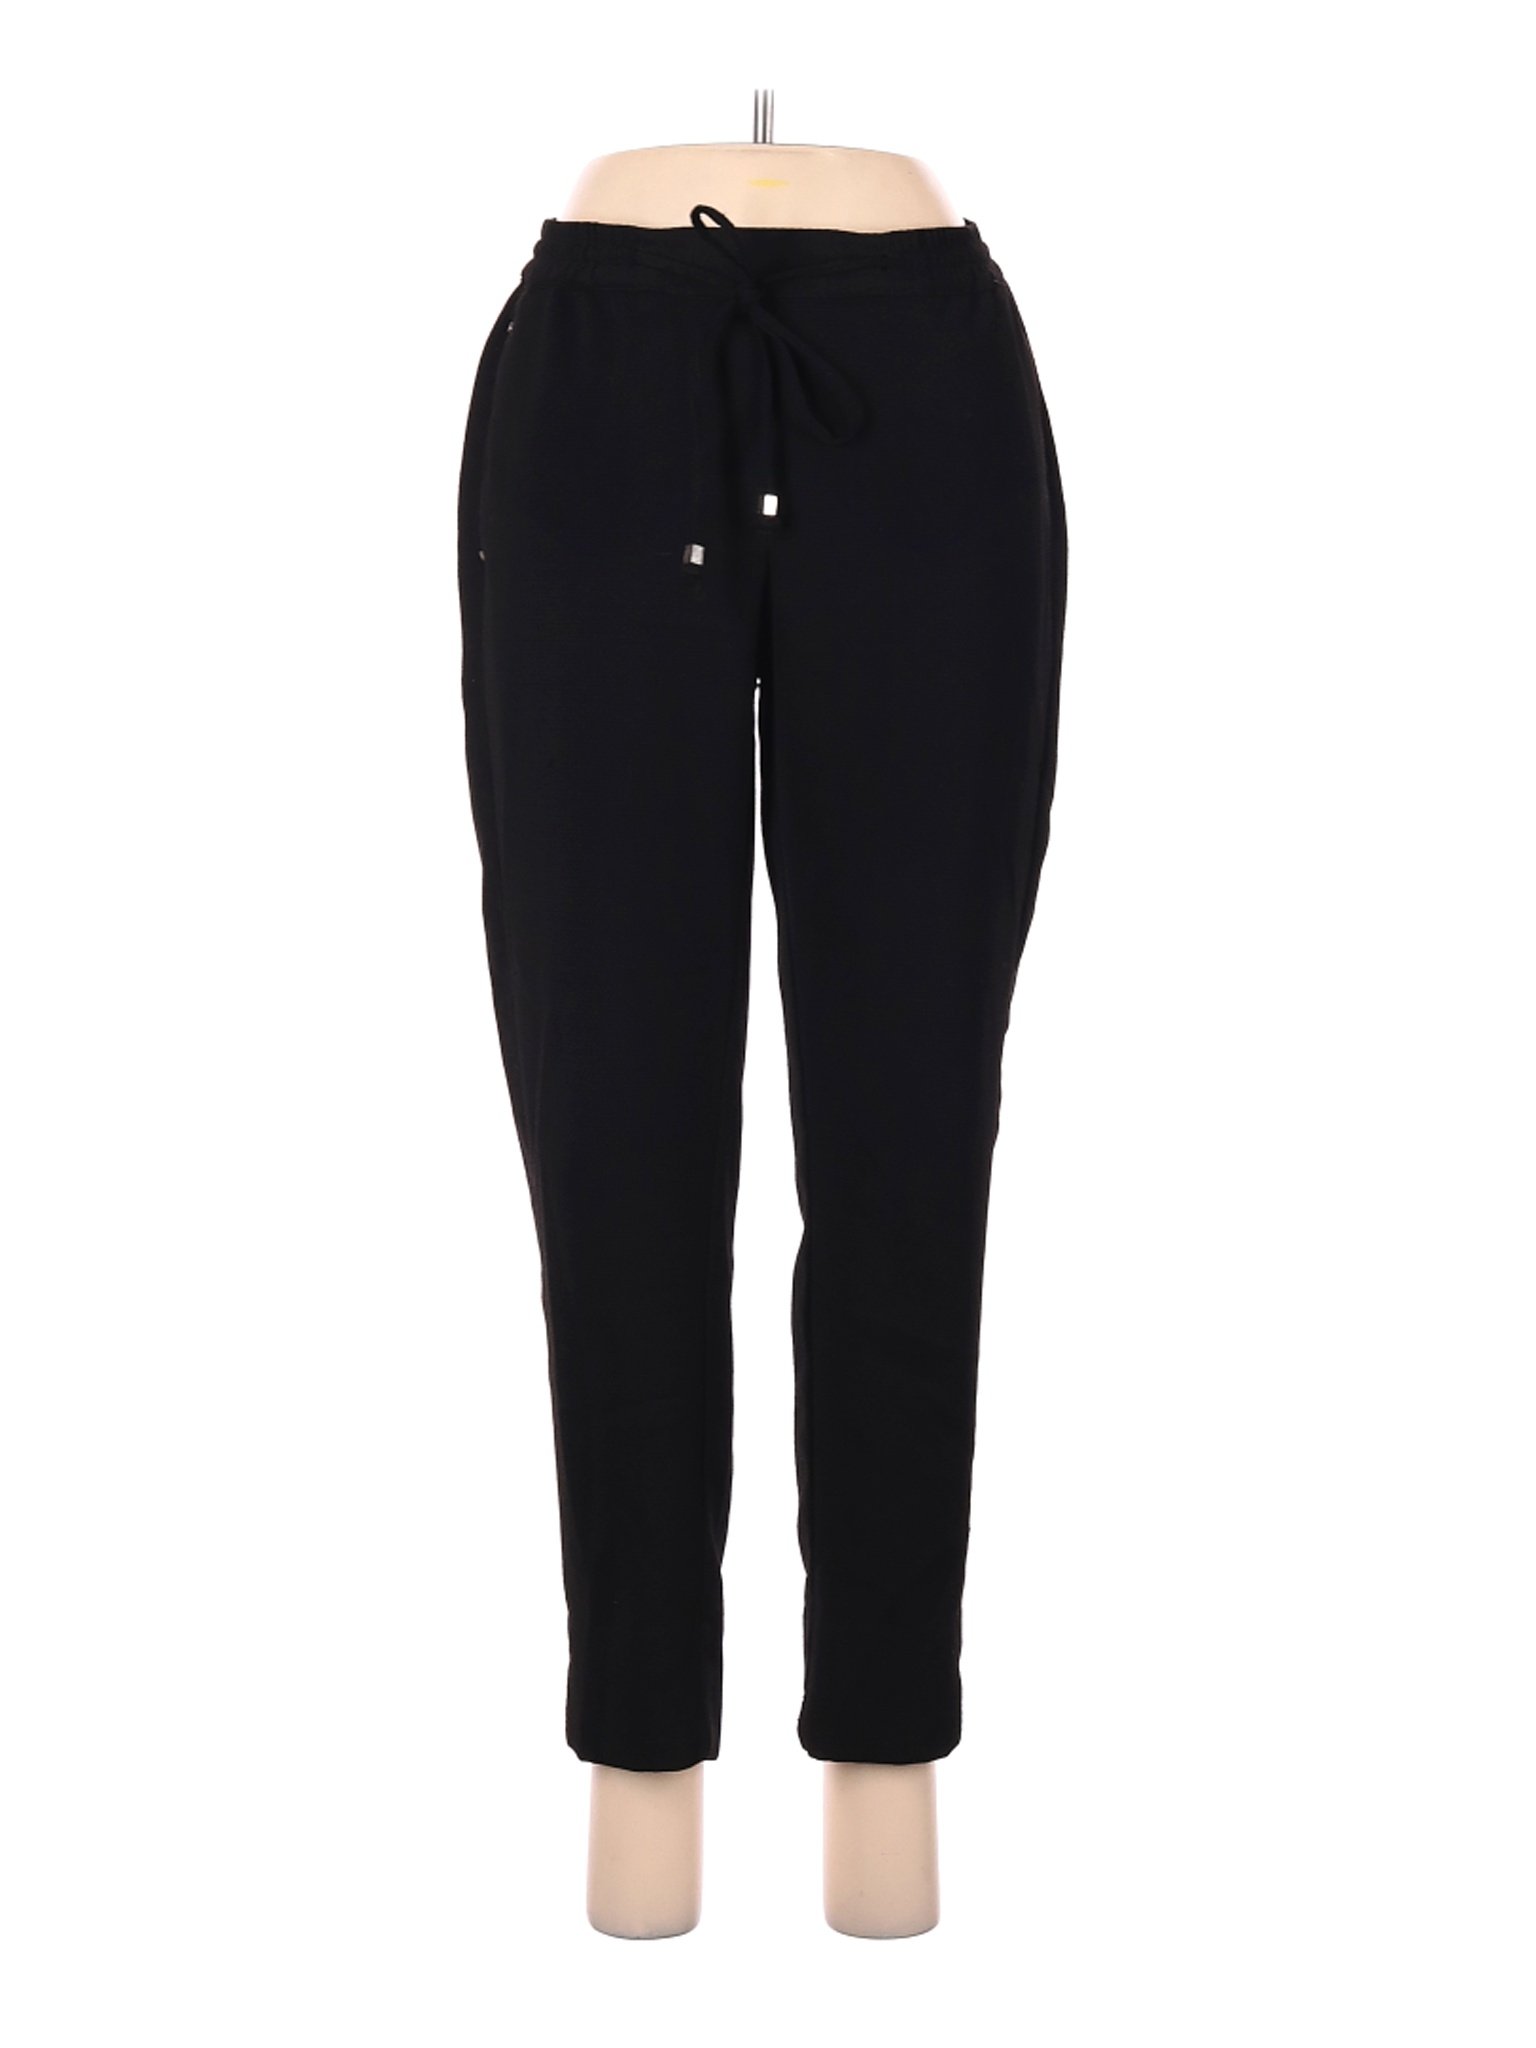 H&M Women Black Casual Pants 8 | eBay